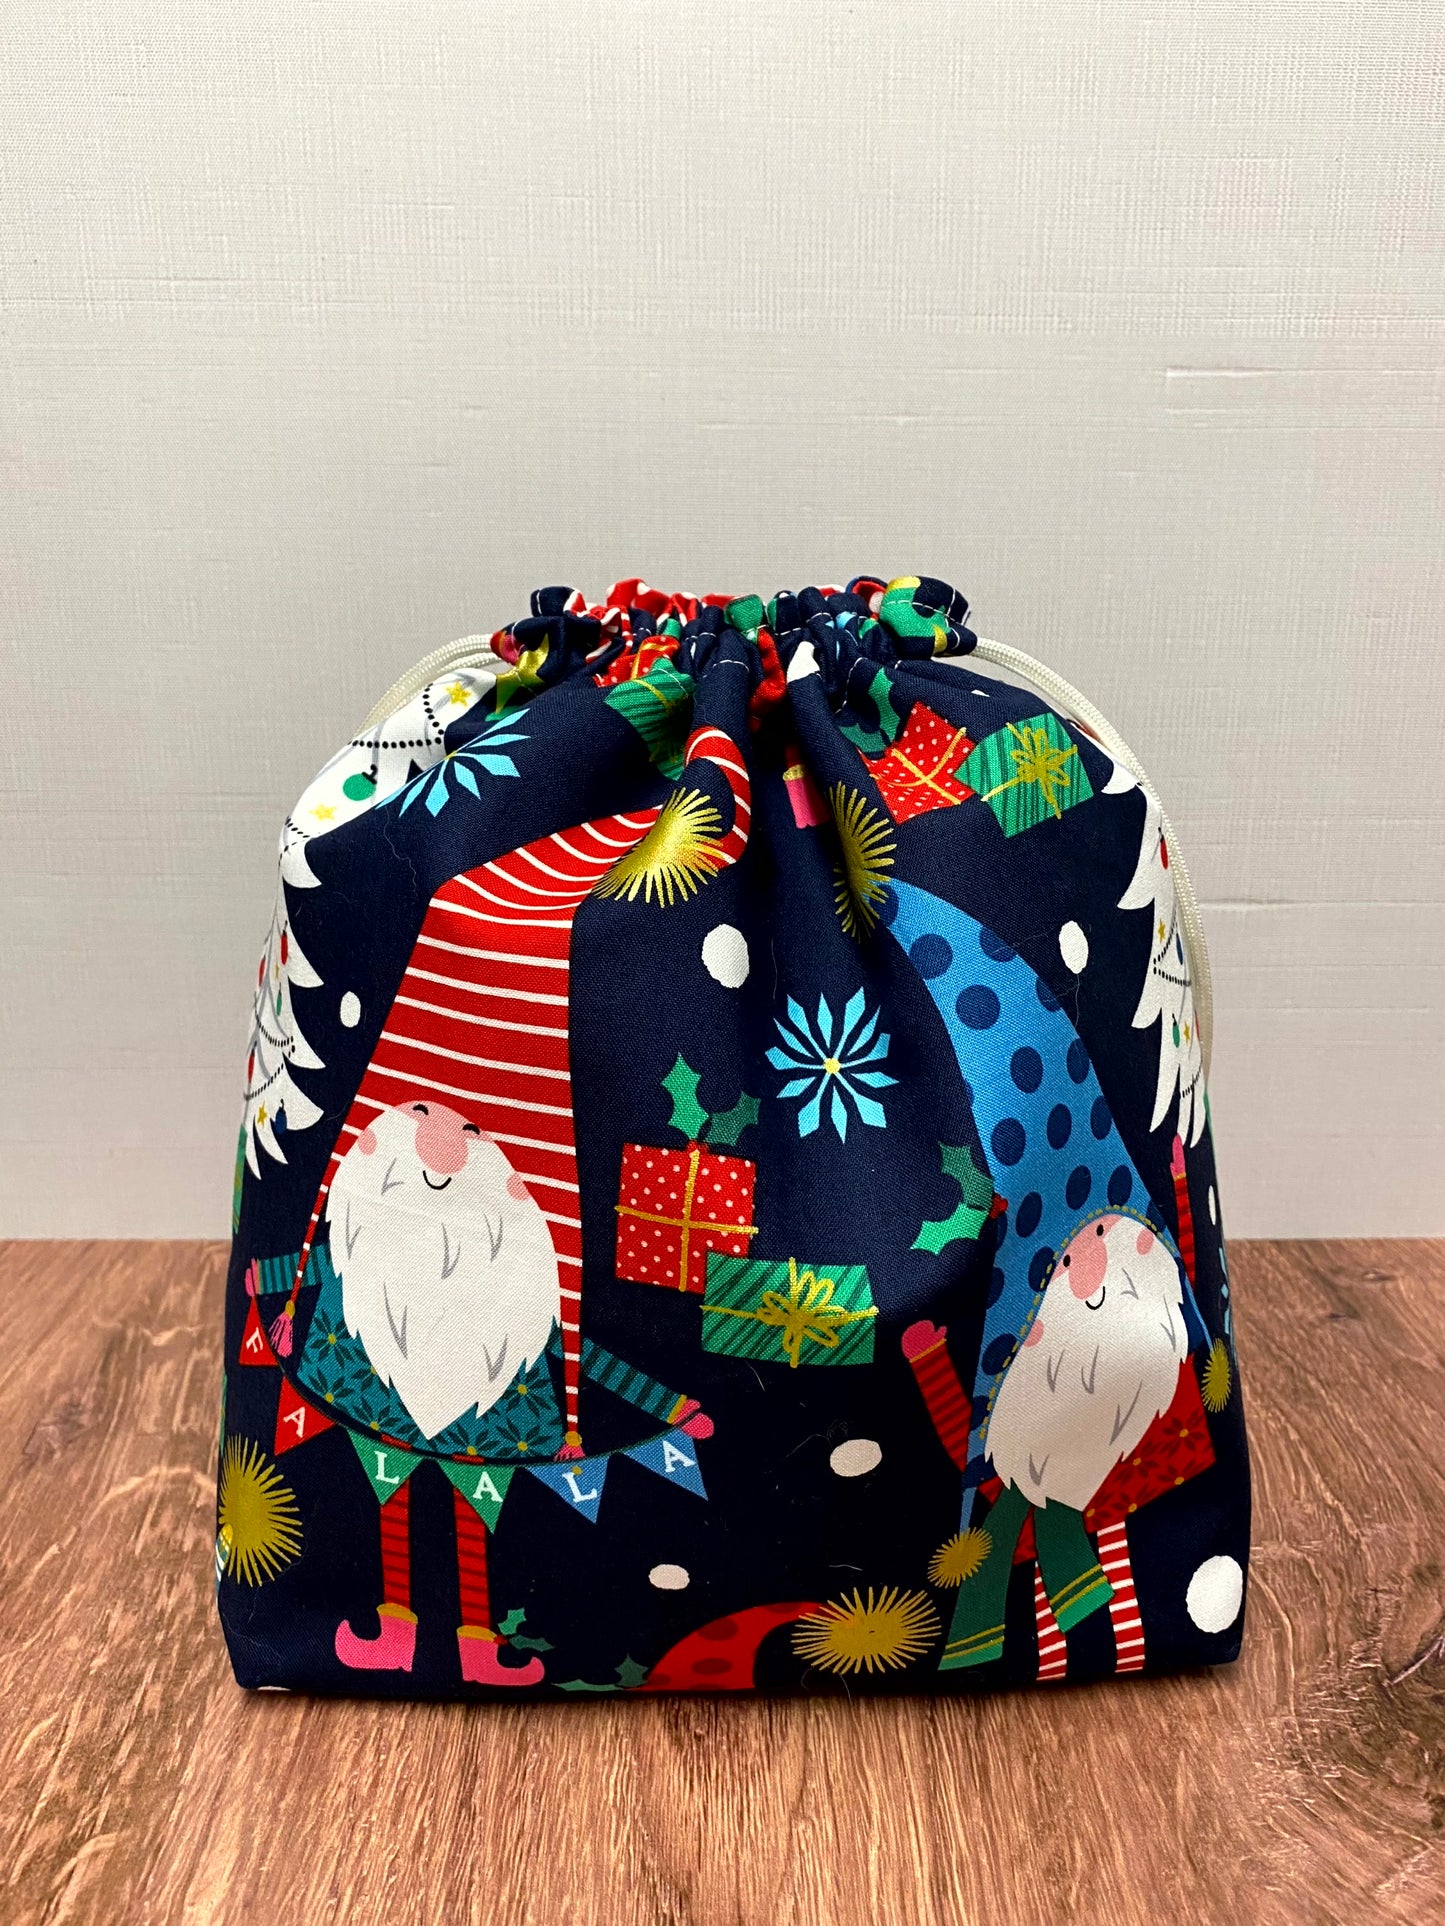 Christmas Gnome Project Bag - Handmade - Drawstring Bag – Crochet Bag - Knitting Bag - Cross Stitch Bag - Tree - Winter